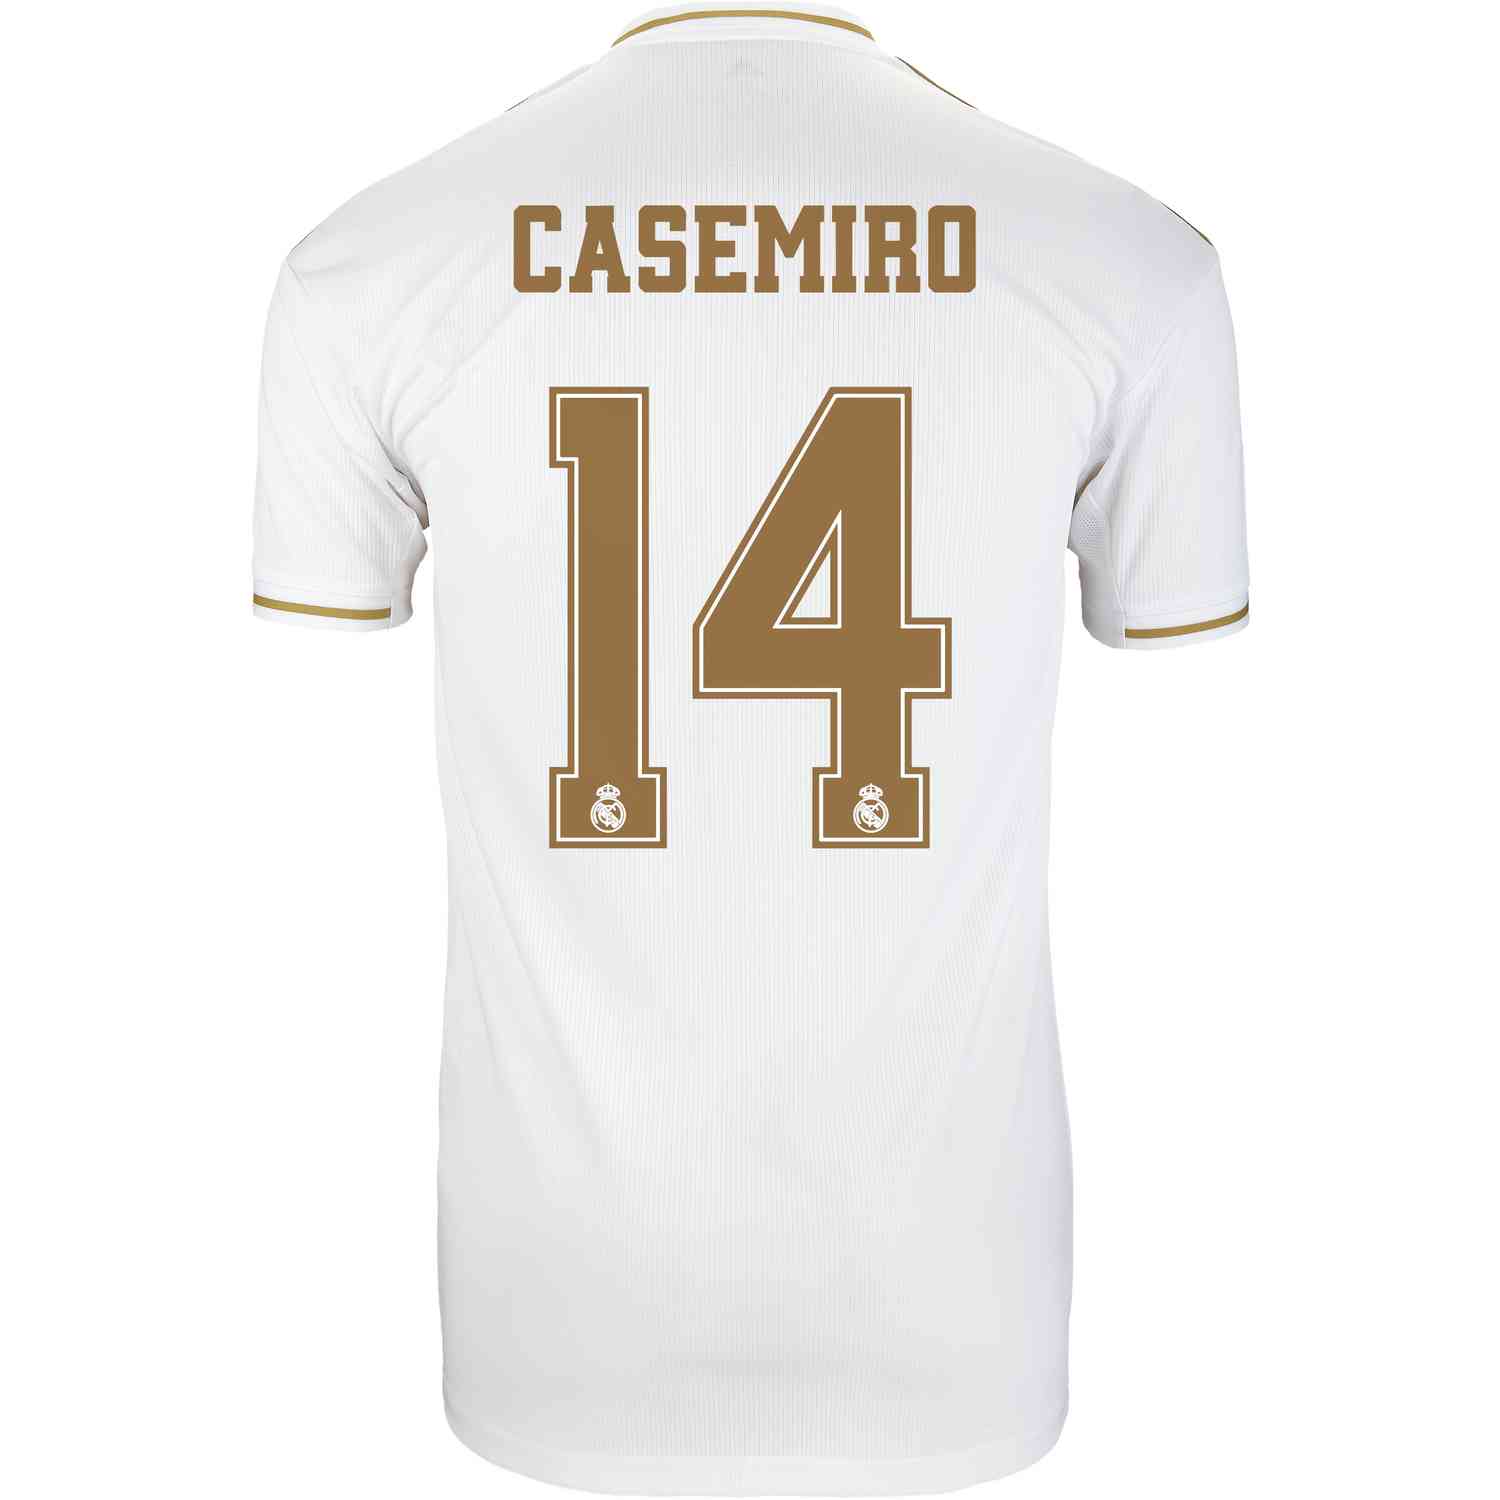 2019/20 adidas Casemiro Real Madrid 